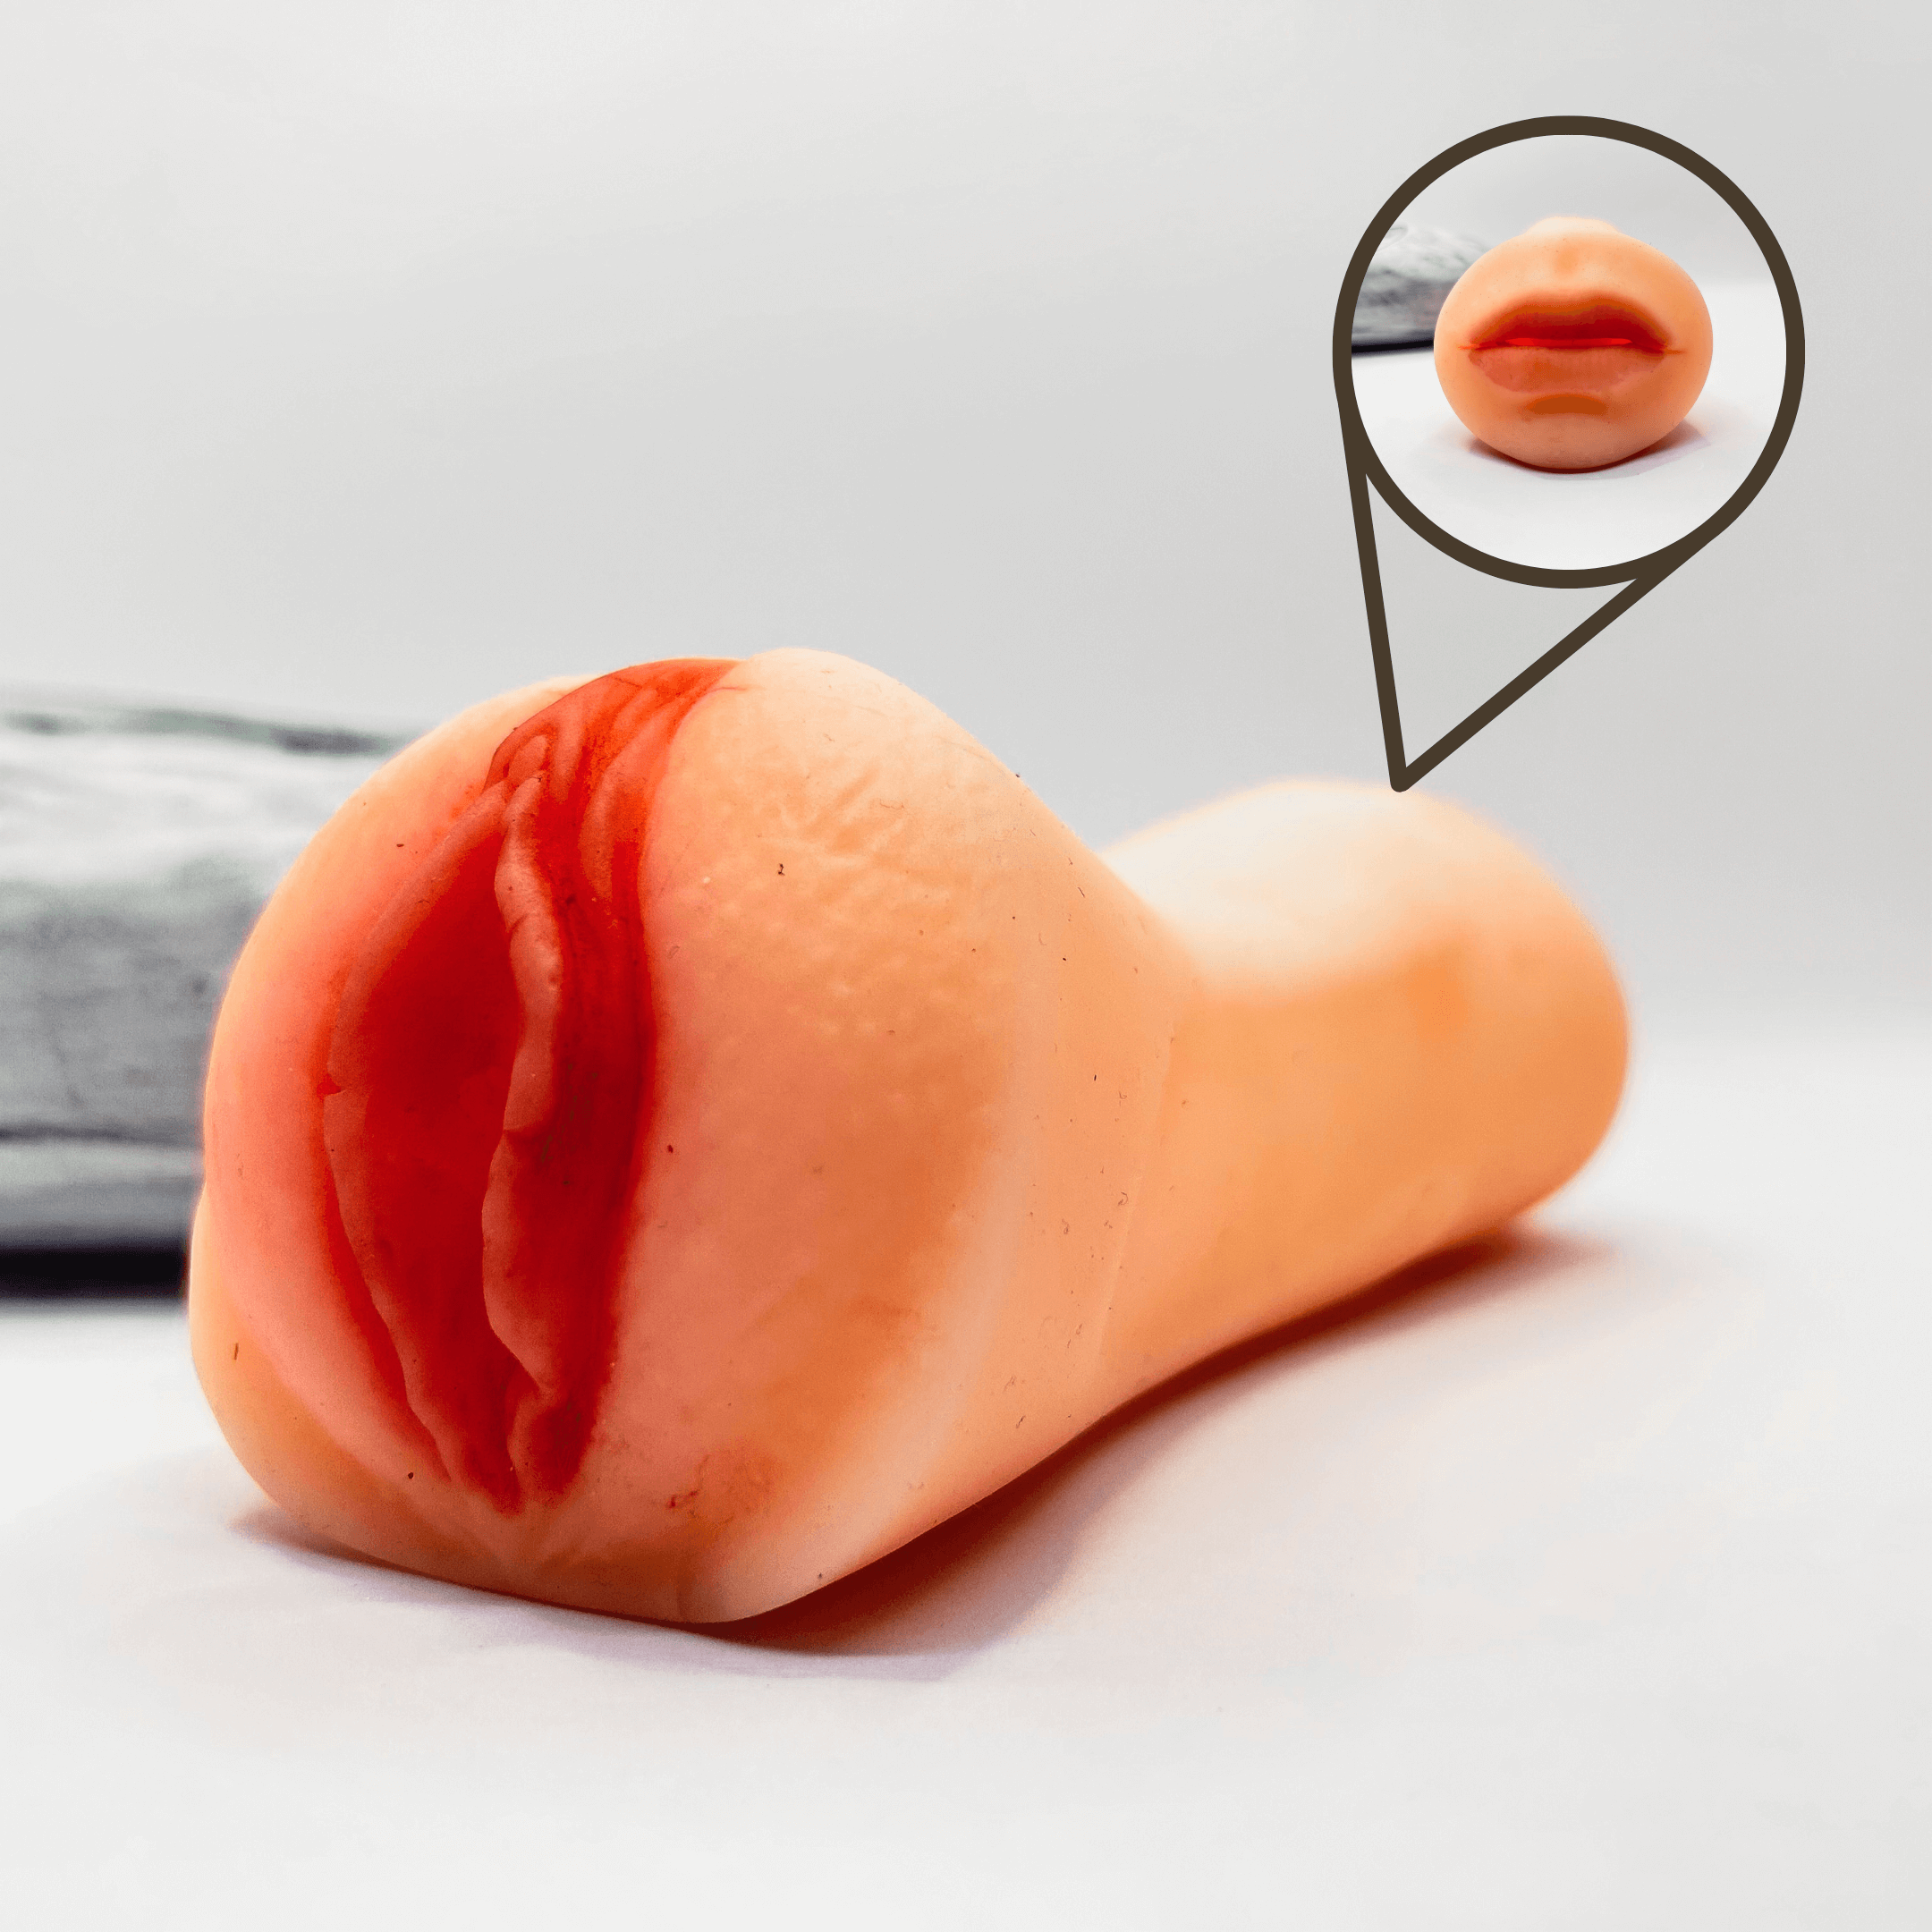 brigitte larose recommends how to make male masturbator pic